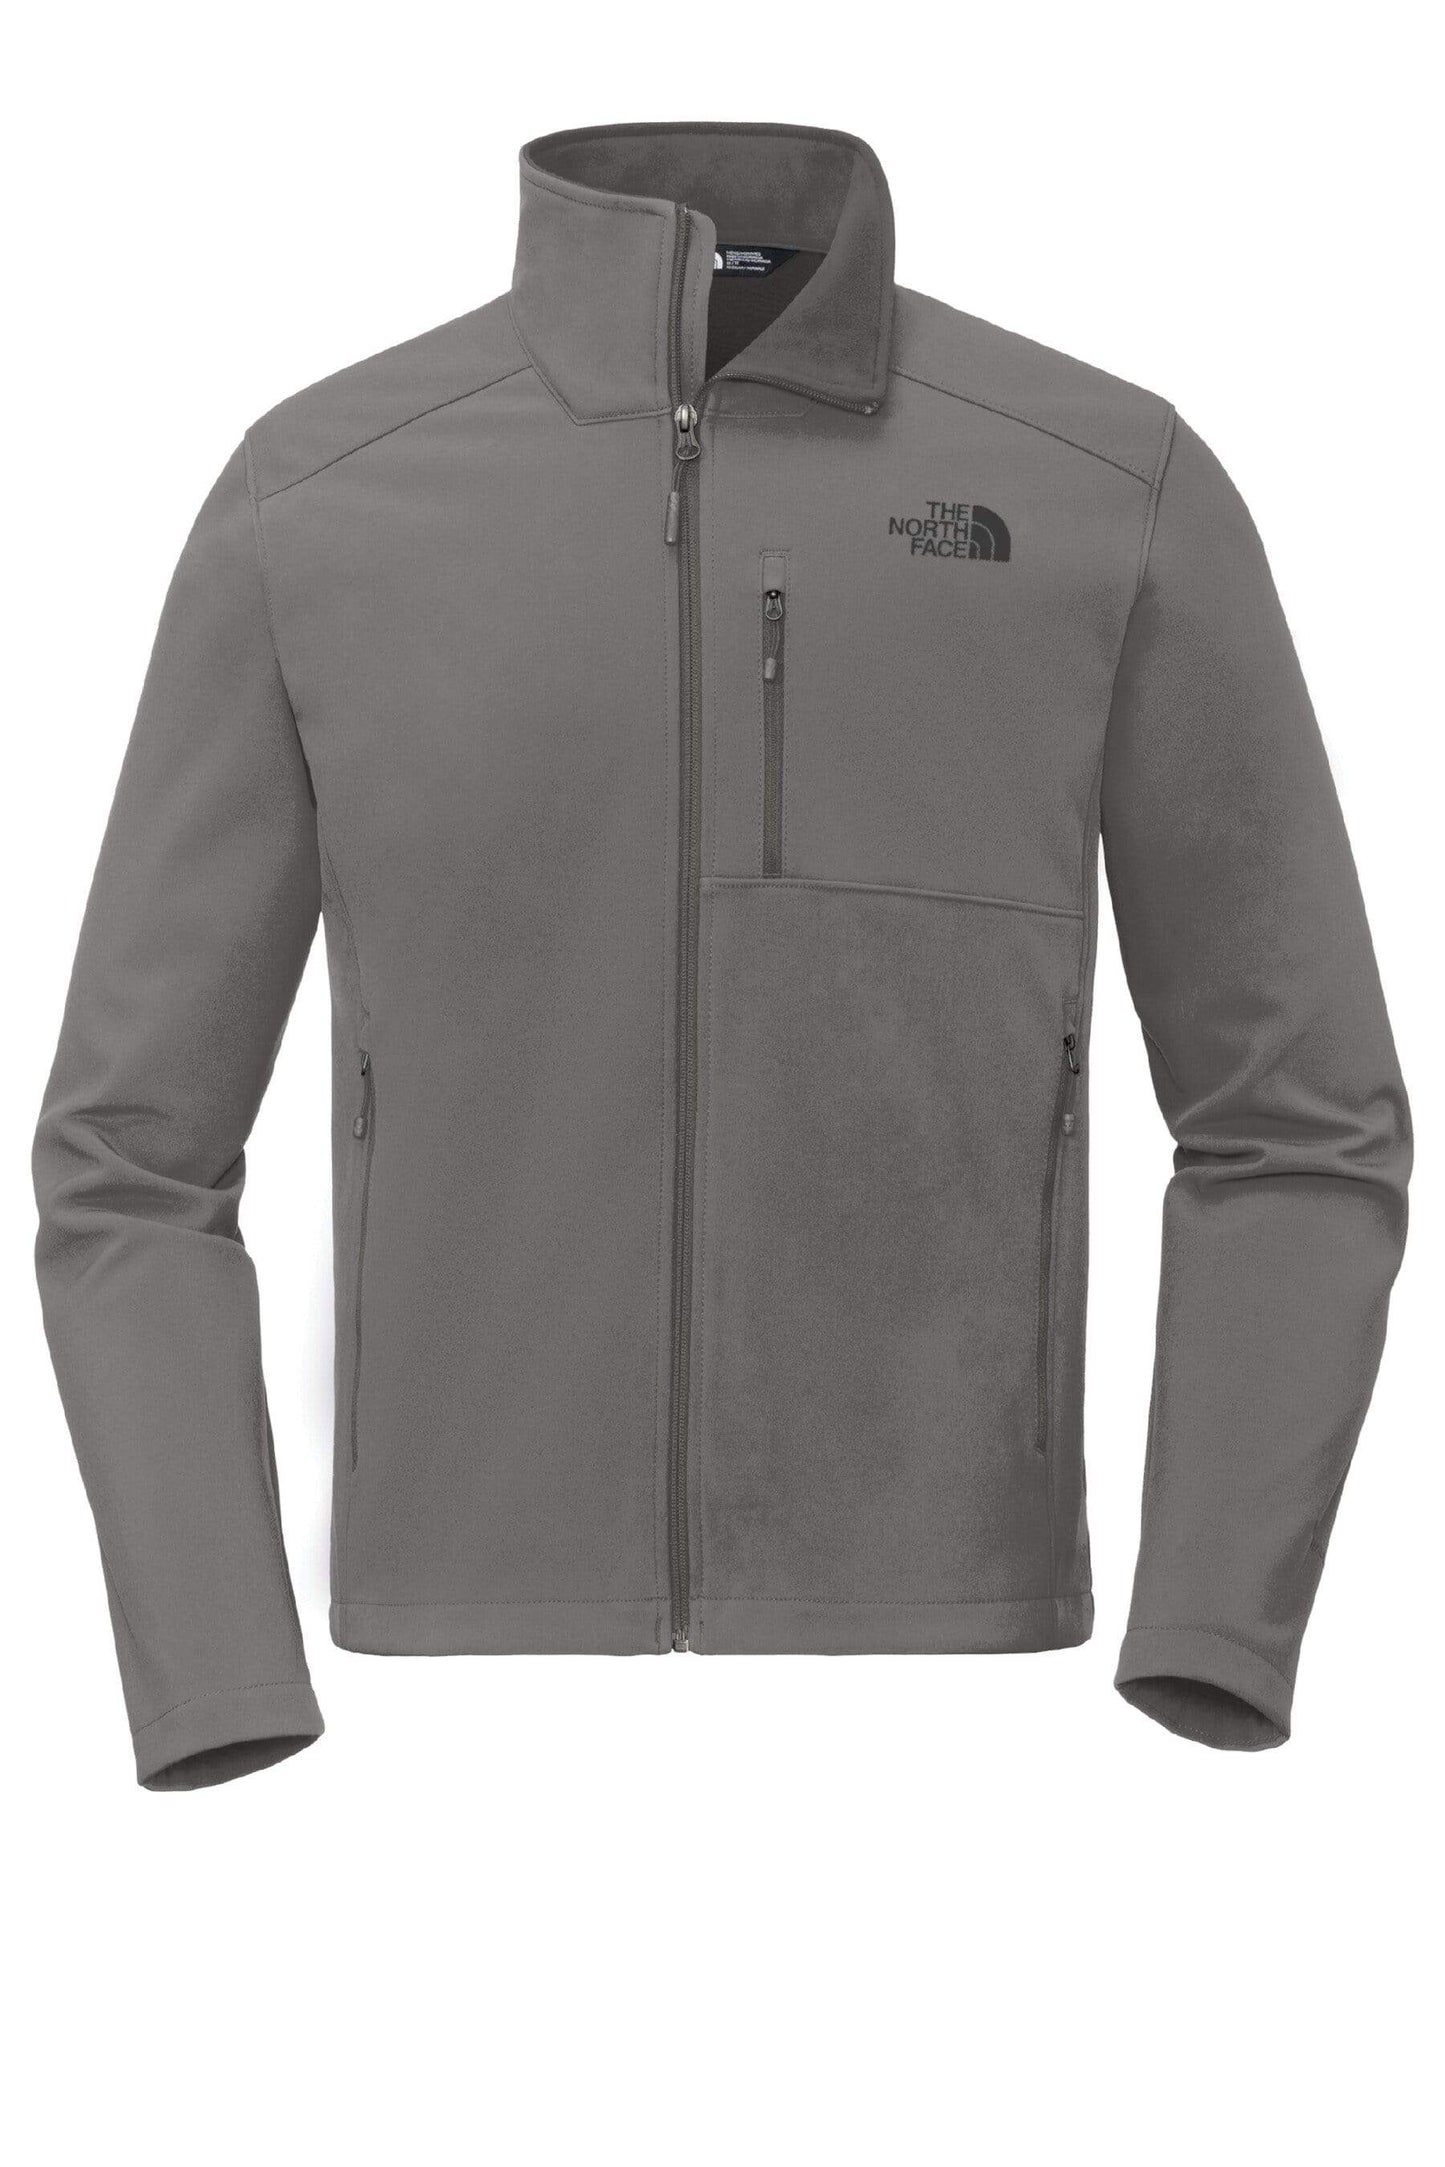 Asphalt Grey / SM Custom The North Face Mens Apex Barrier Soft Shell Jacket